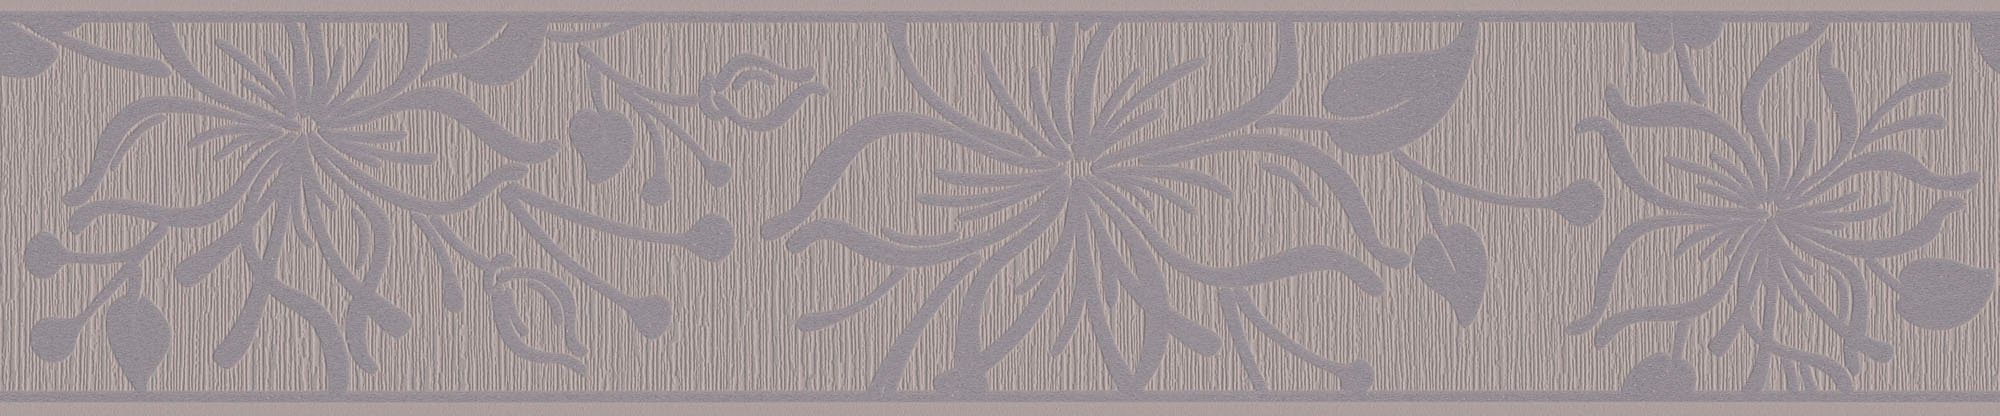 Bordüre Bordüre Blumen Borders braun/grau Création Tapete geblümt, strukturiert, Only A.S. 11, floral, natürlich,